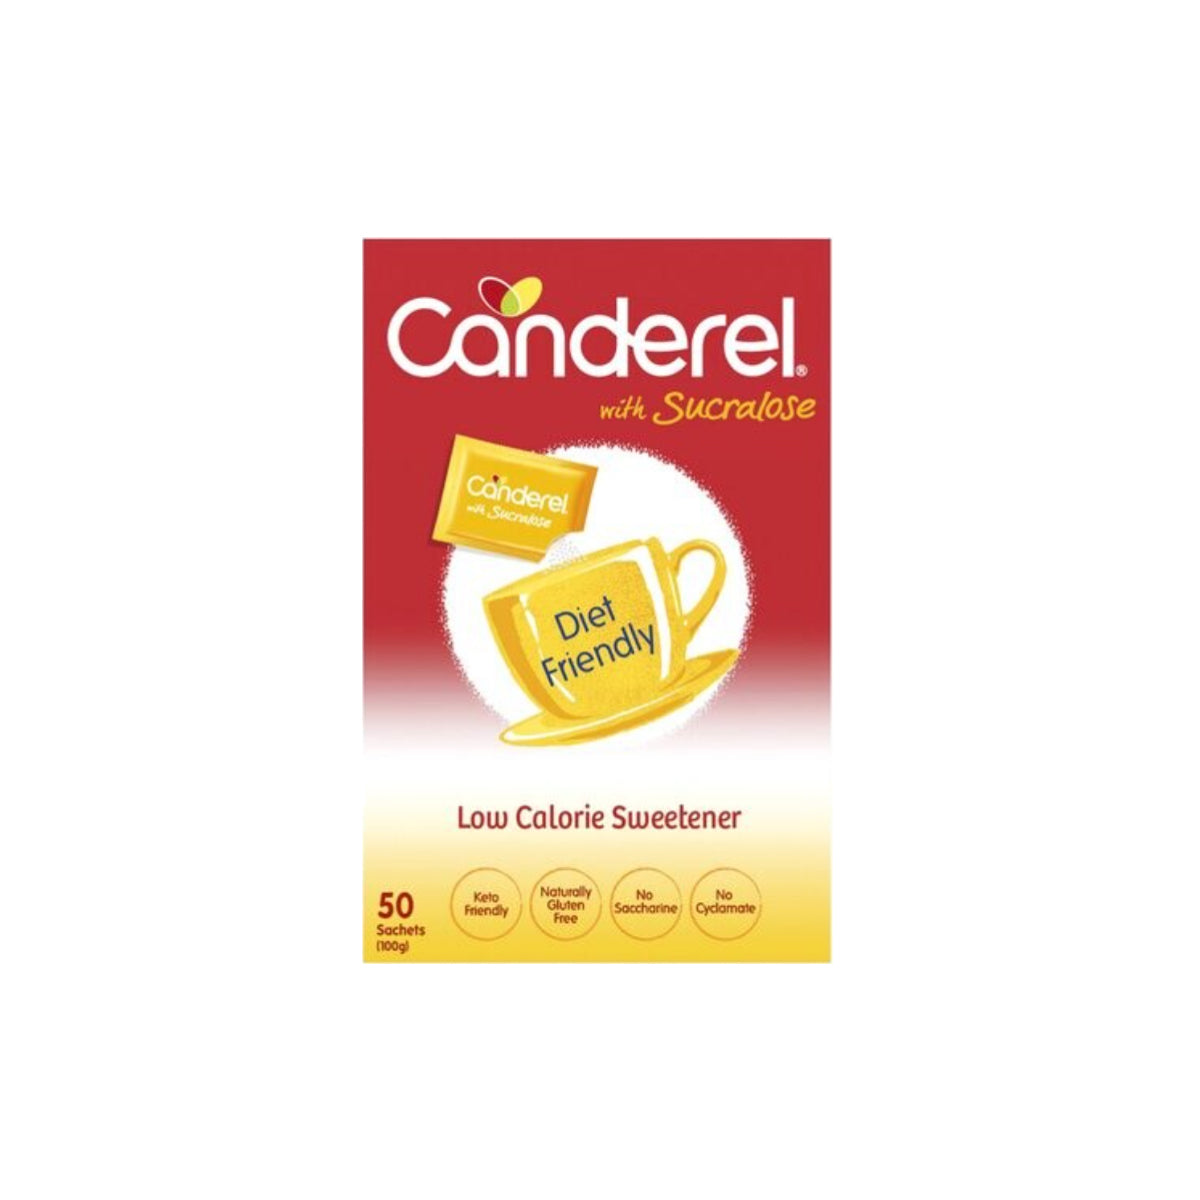 Canderel Sucralose Sweetener Sticks 2g per sachet, 50/pack